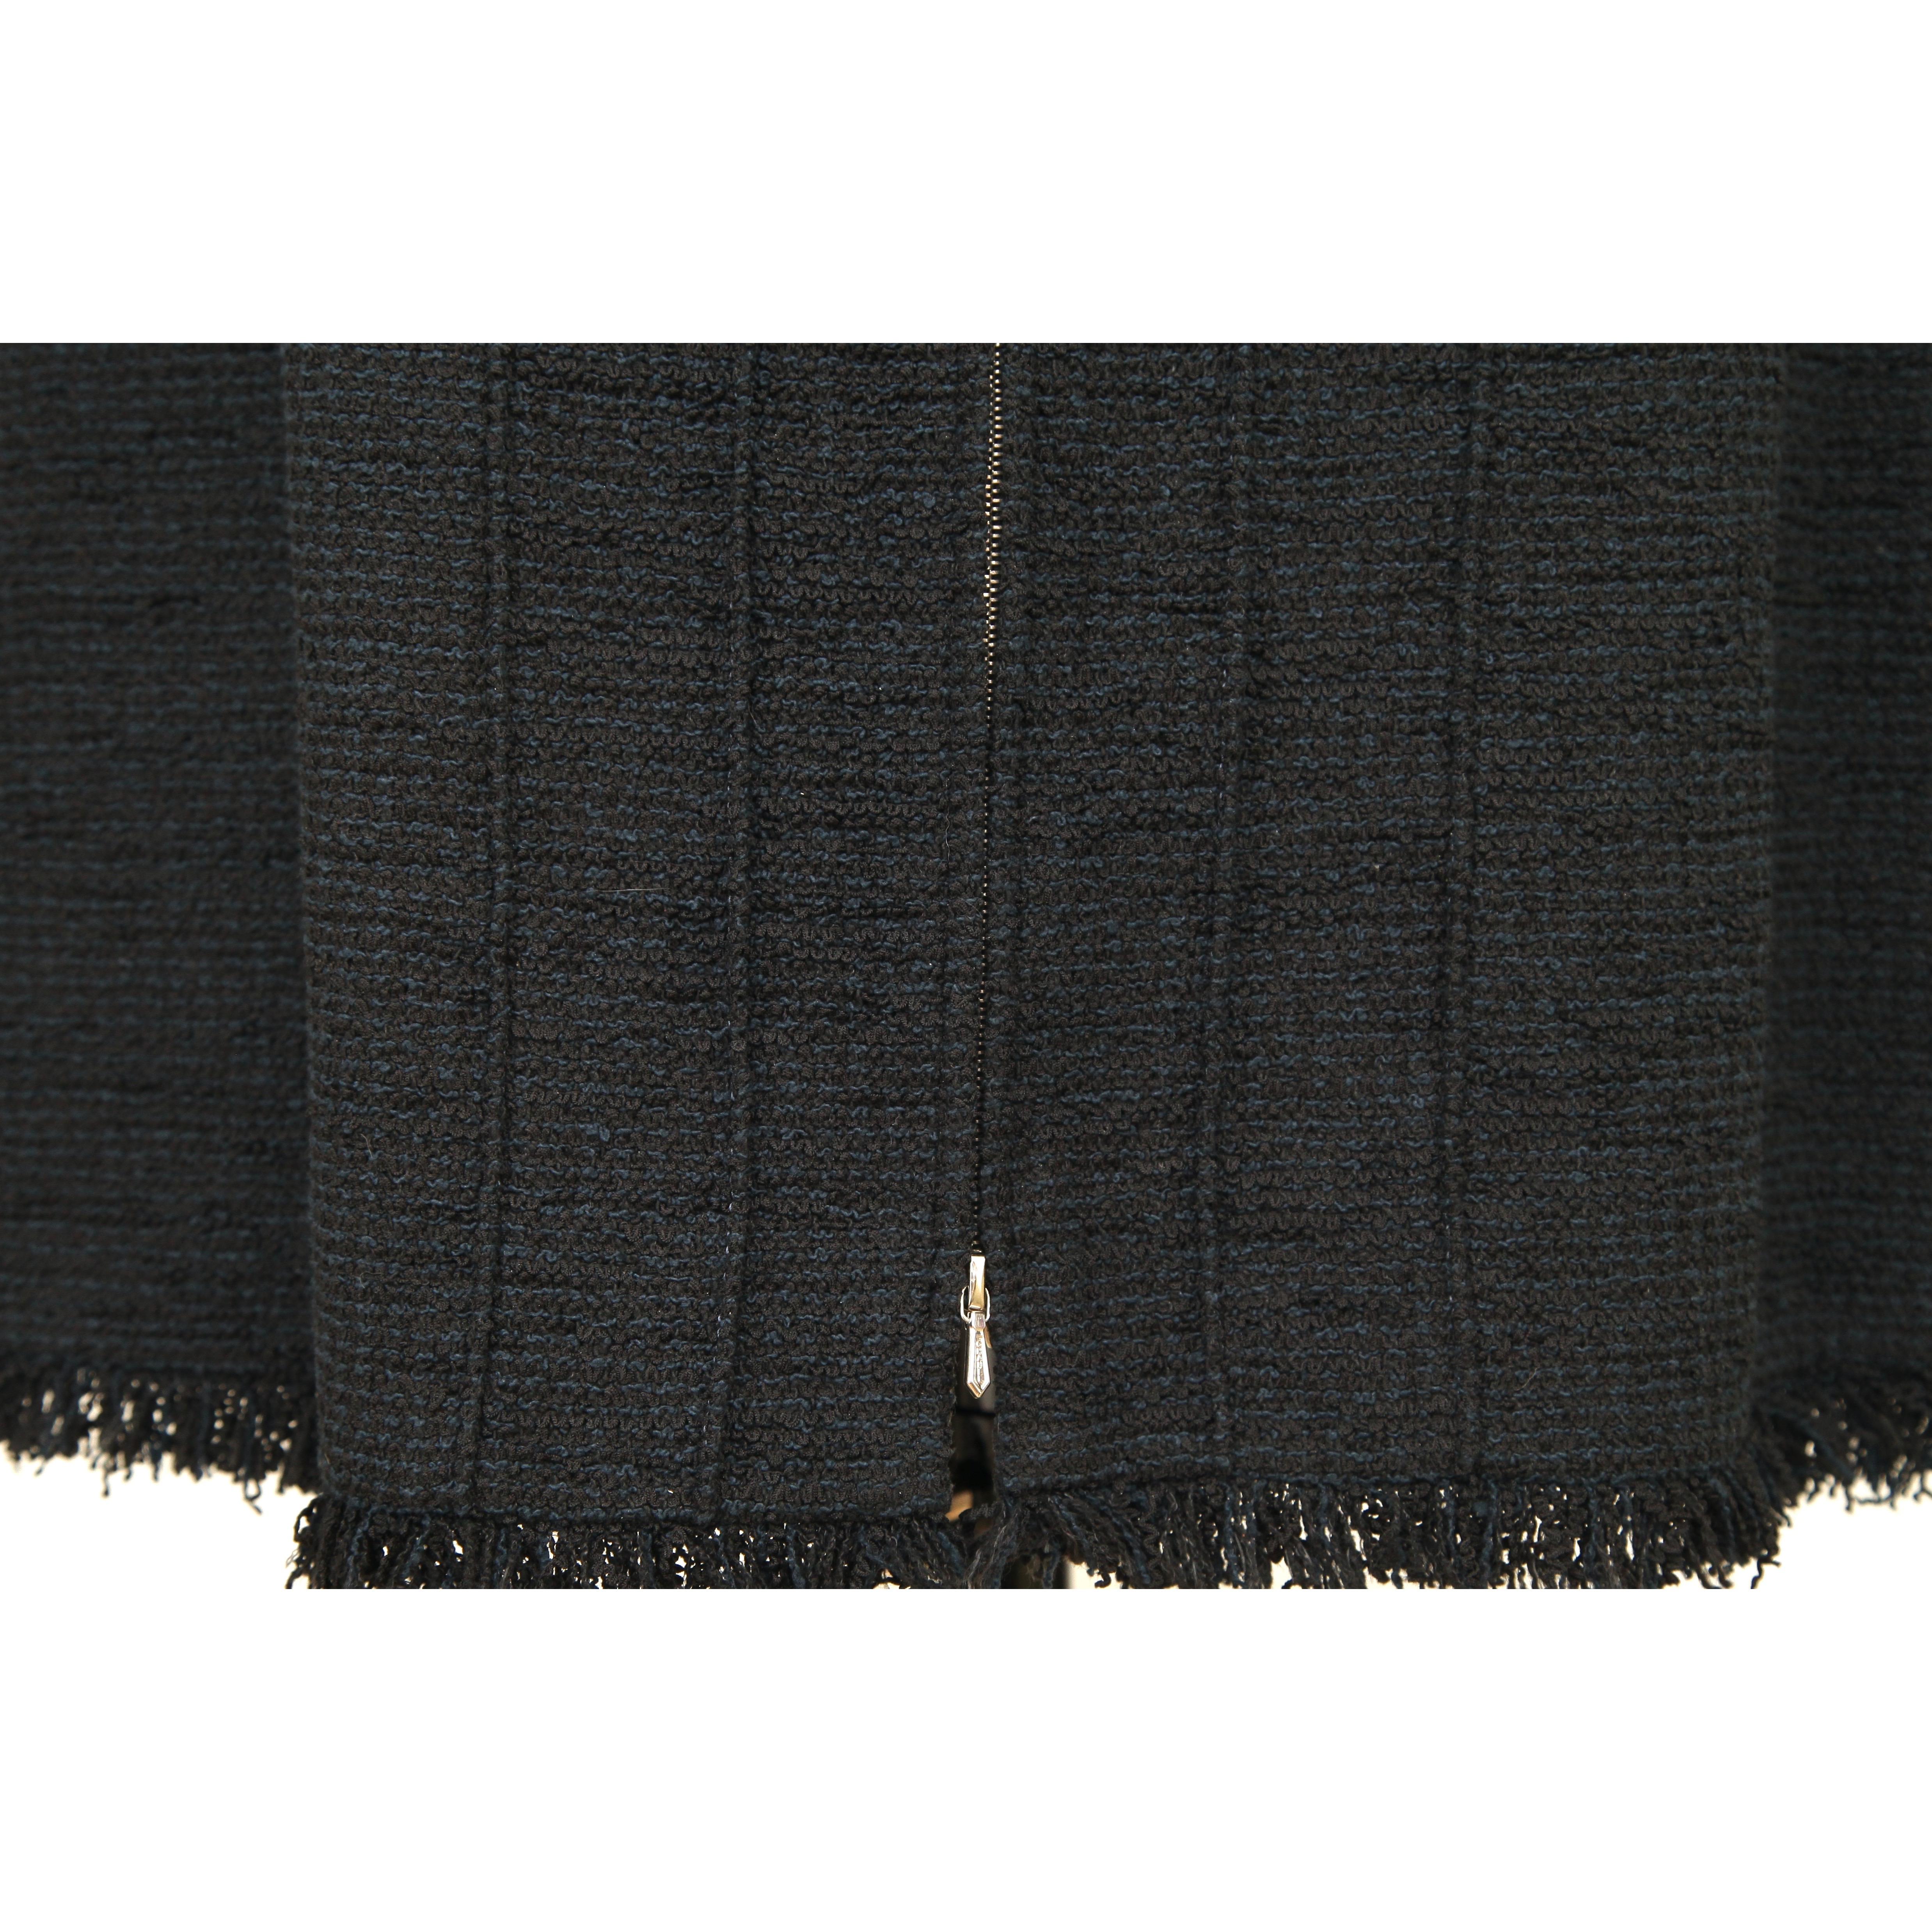 CHANEL Black Blue Tweed Skirt Cotton Zipper Button Pockets Sz 40 2013 13C 2